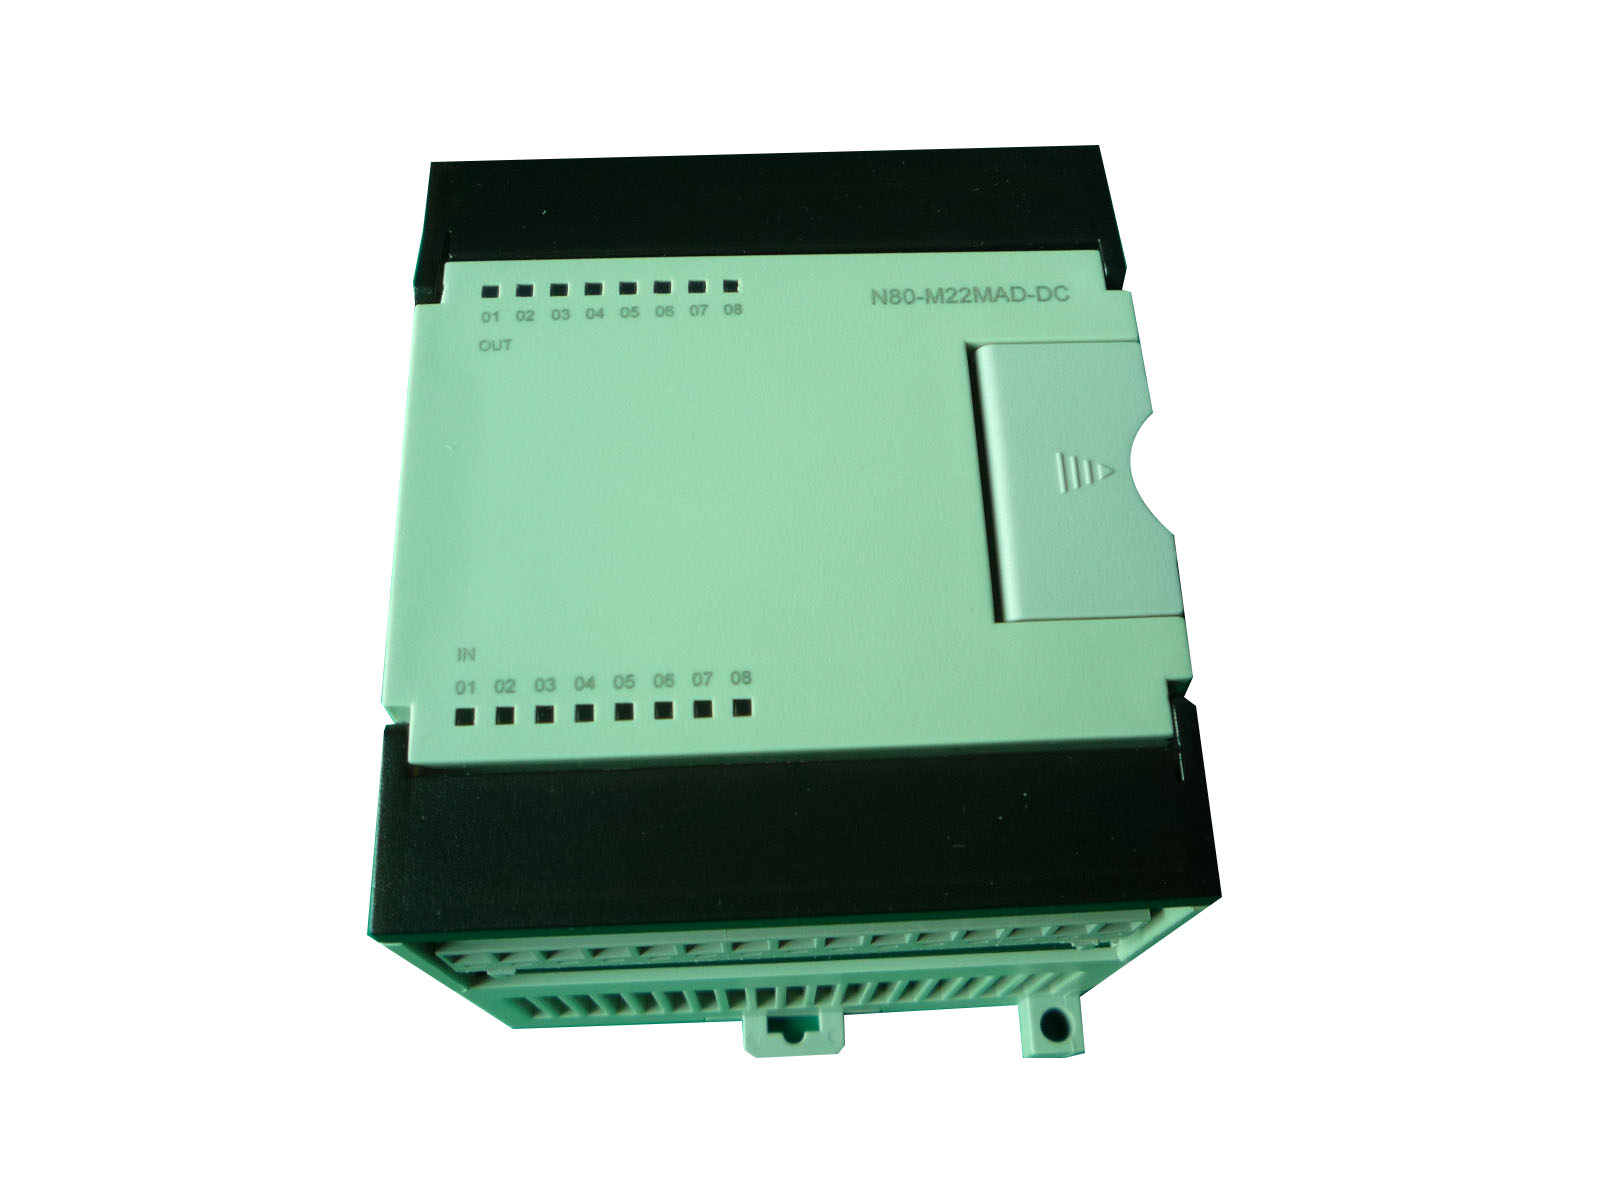 N80-M22MAD-DC 国产控制器 国产PLC 控制器厂家